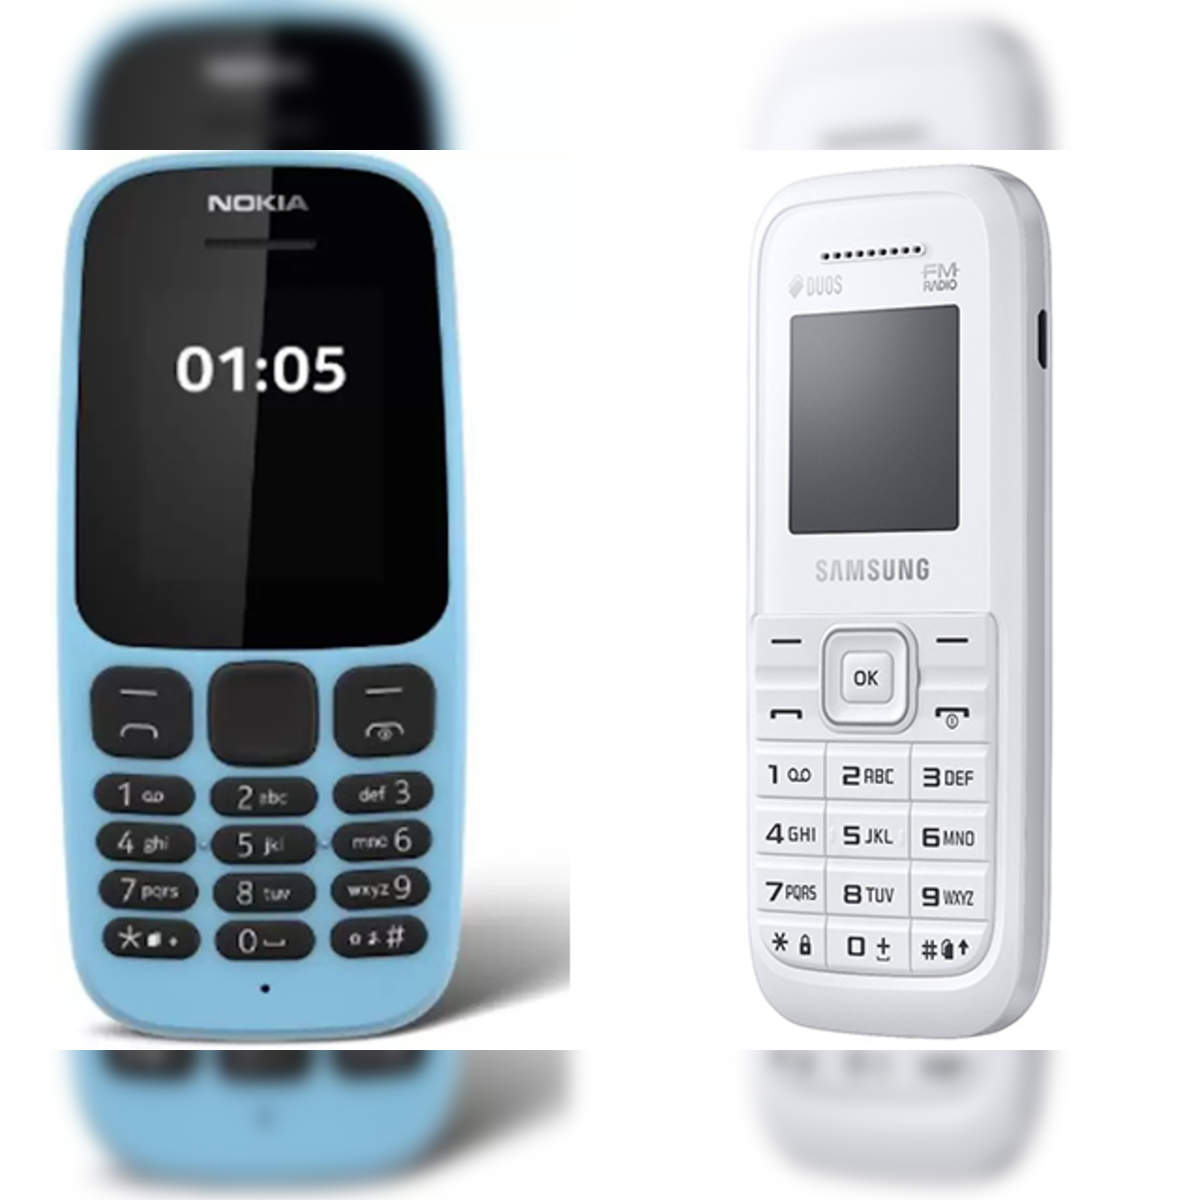 Nokia 105 2023 Price in Pakistan 2024